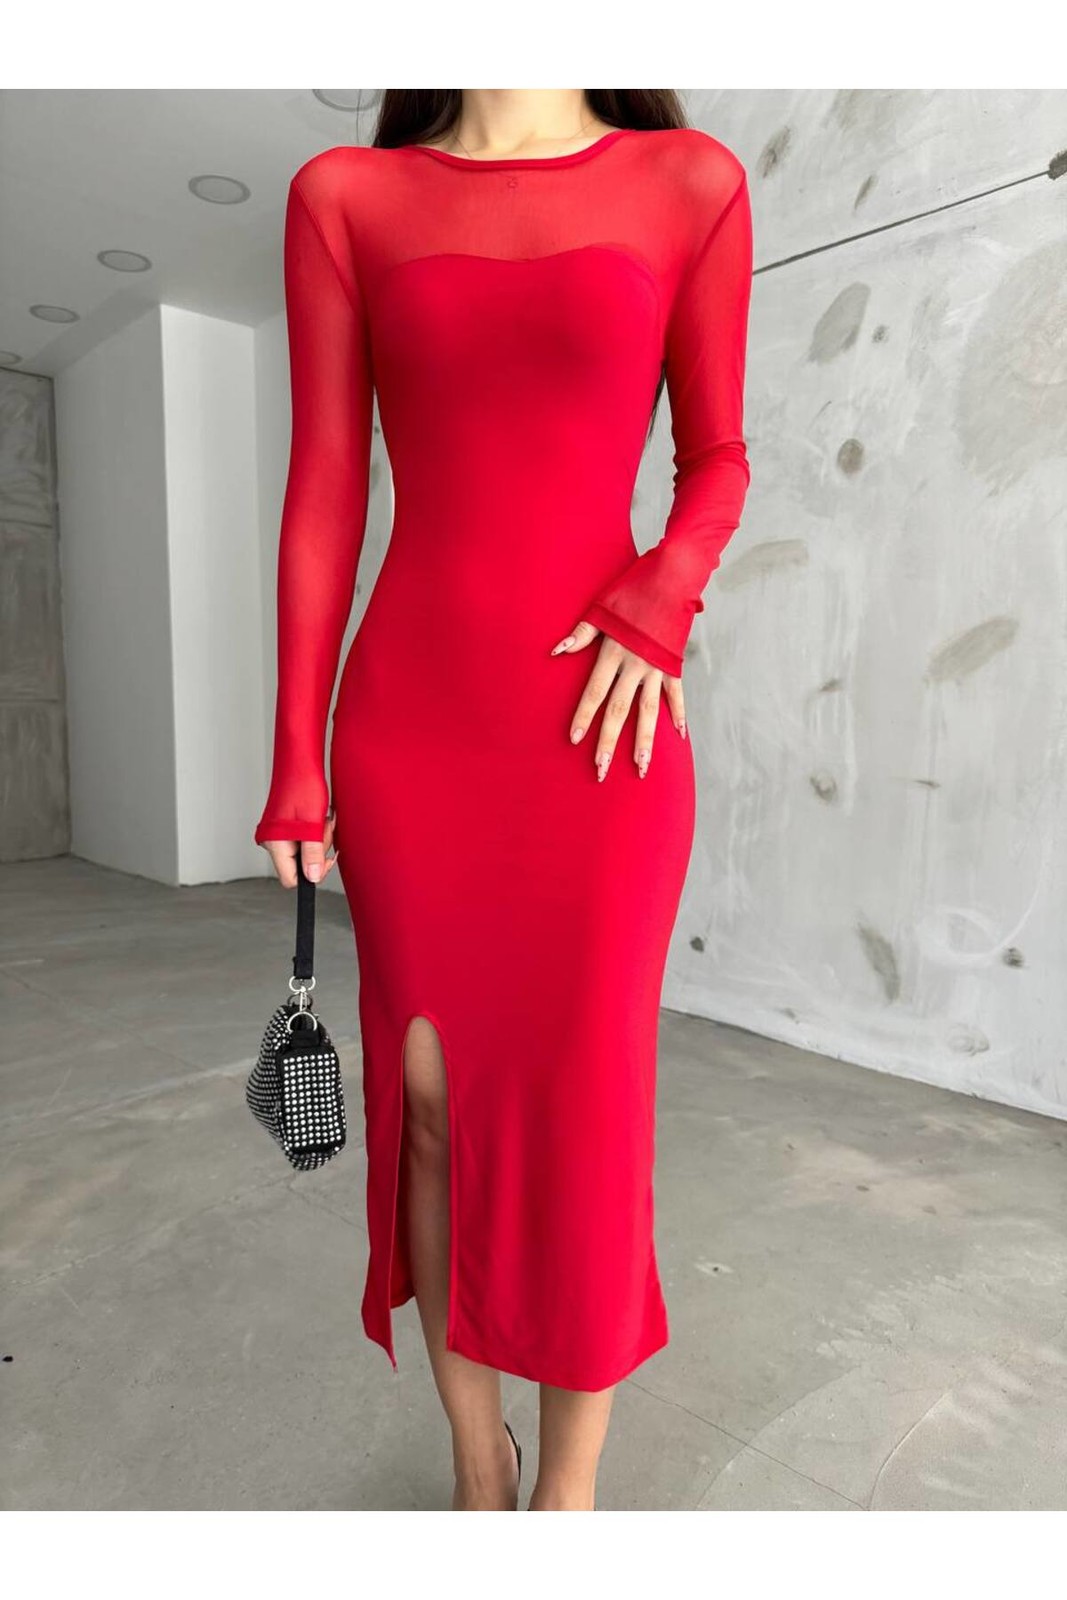 BİKELİFE Women's Red Slit Detailed Lycra Pencil Dress